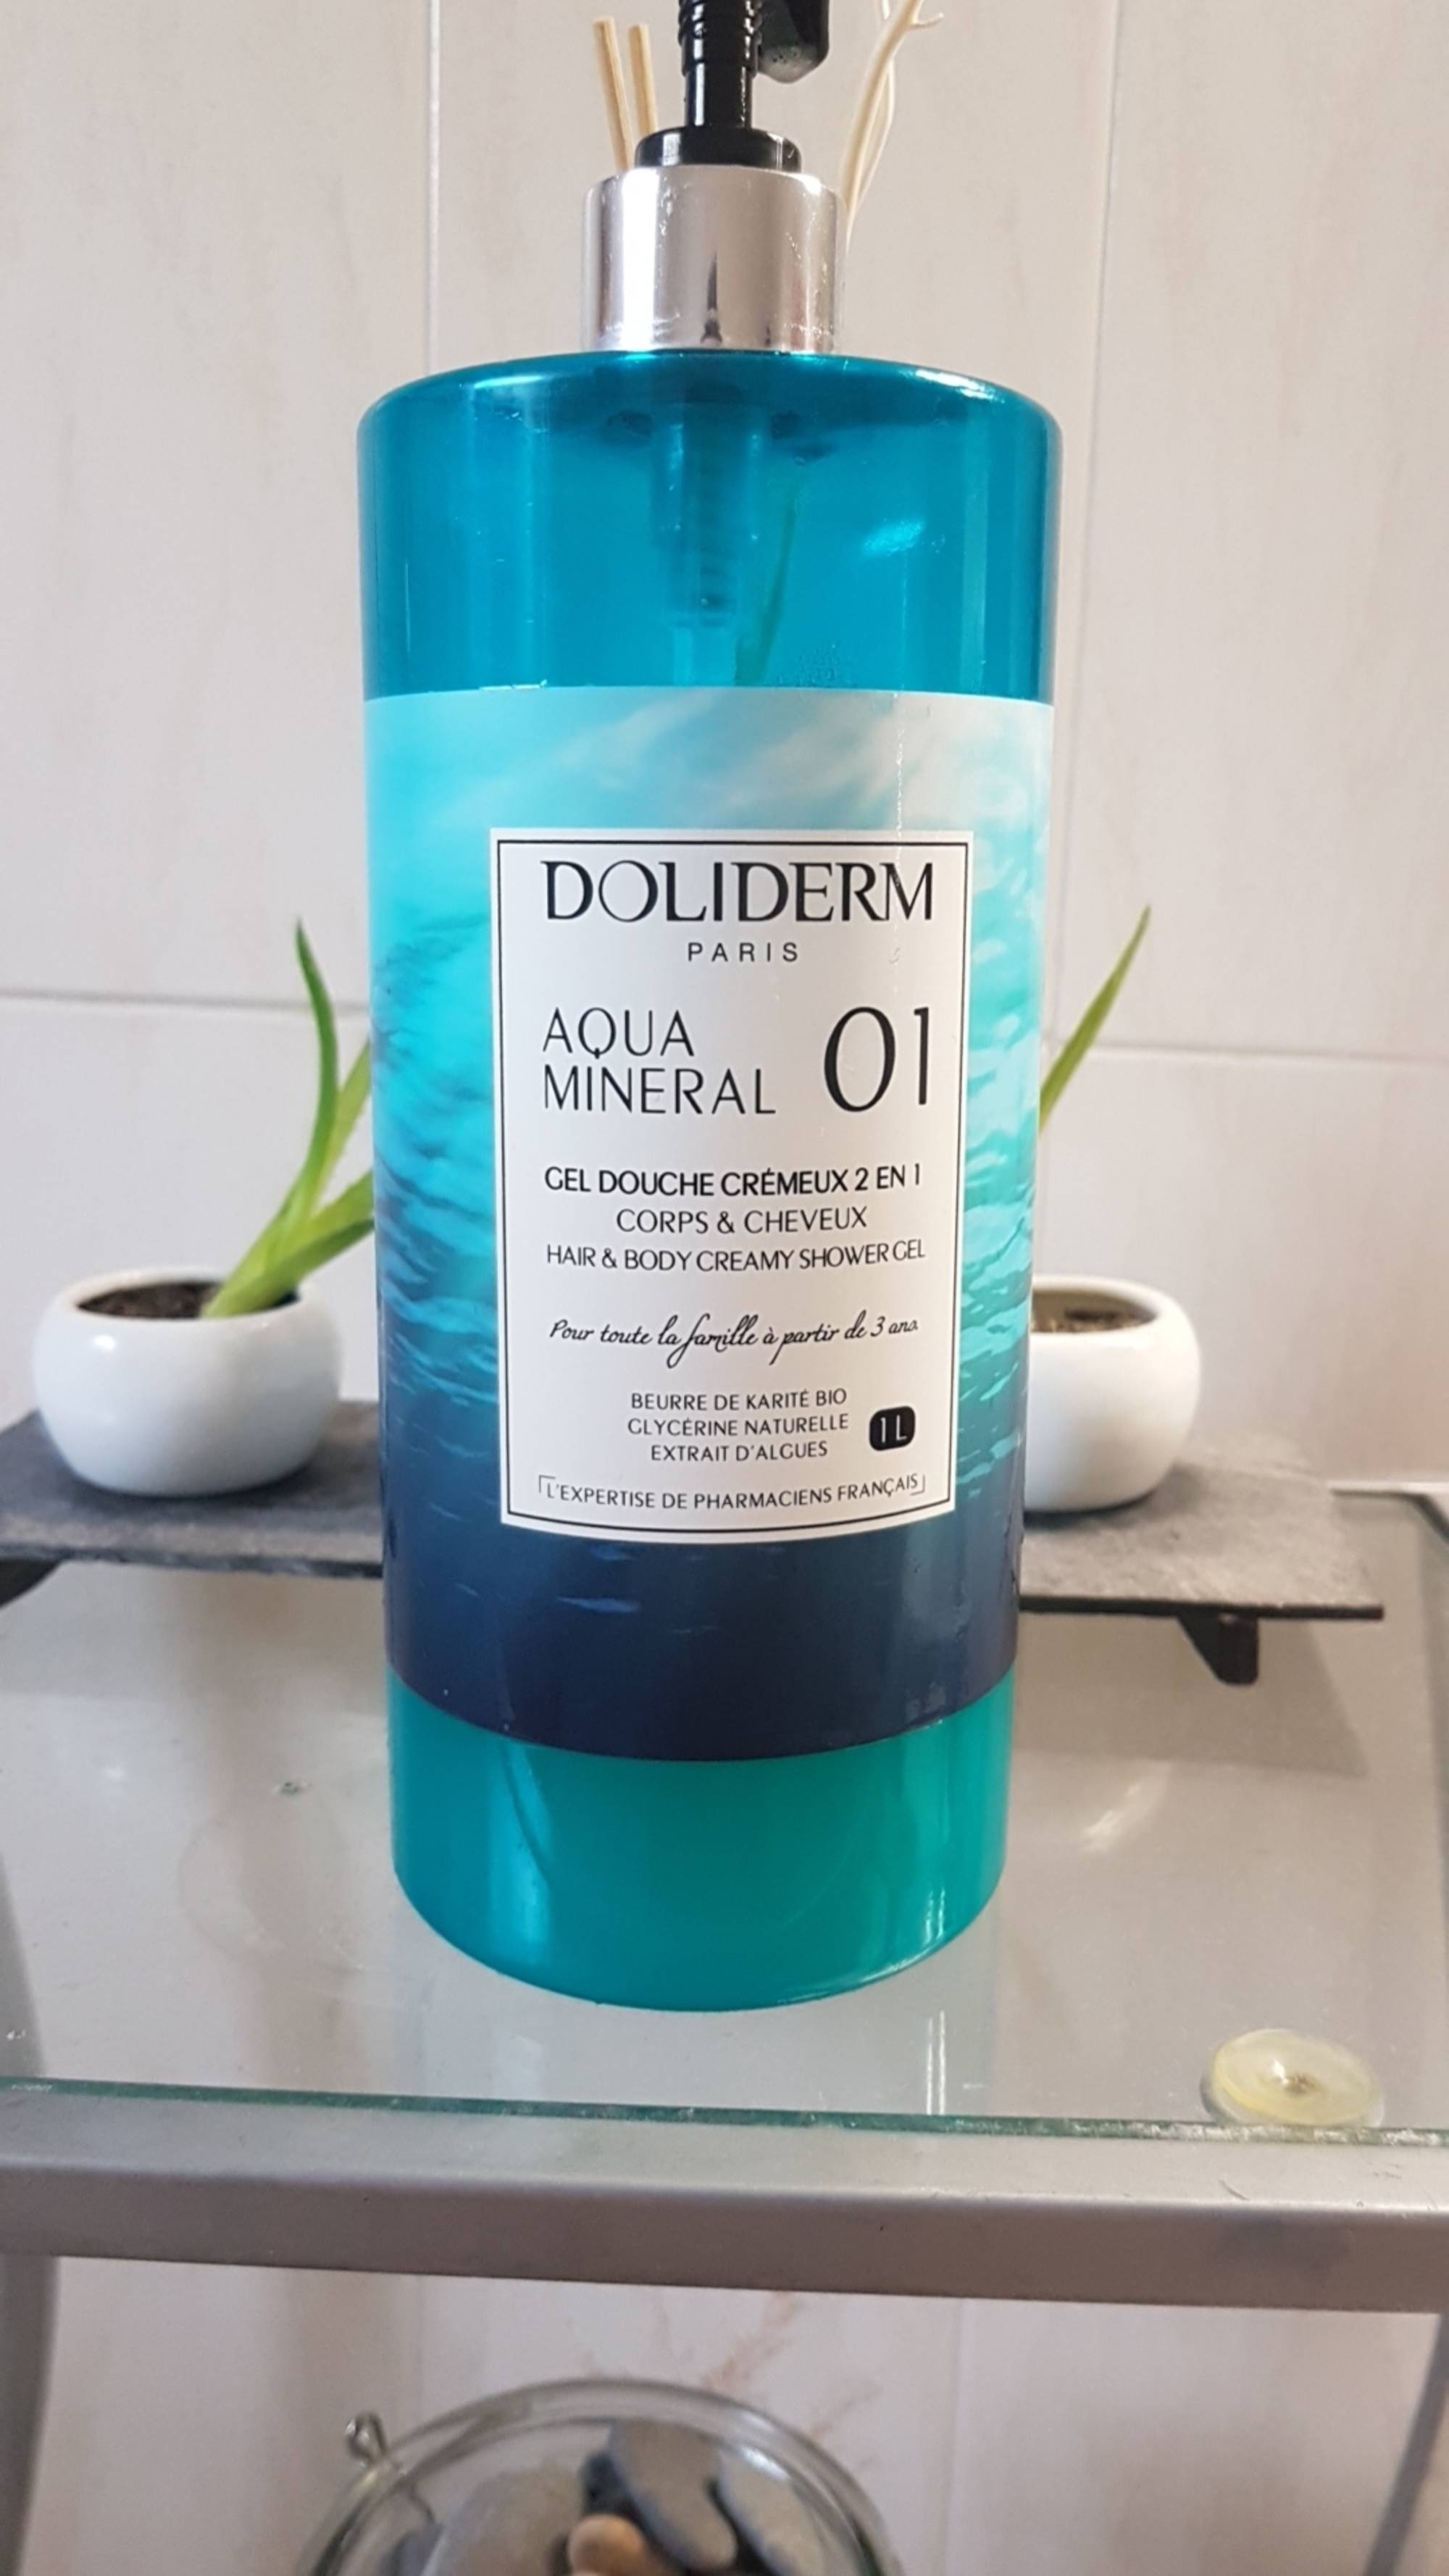 DOLIDERM - Aqua mineral 01 - Gel douche crèmeux 2 en 1